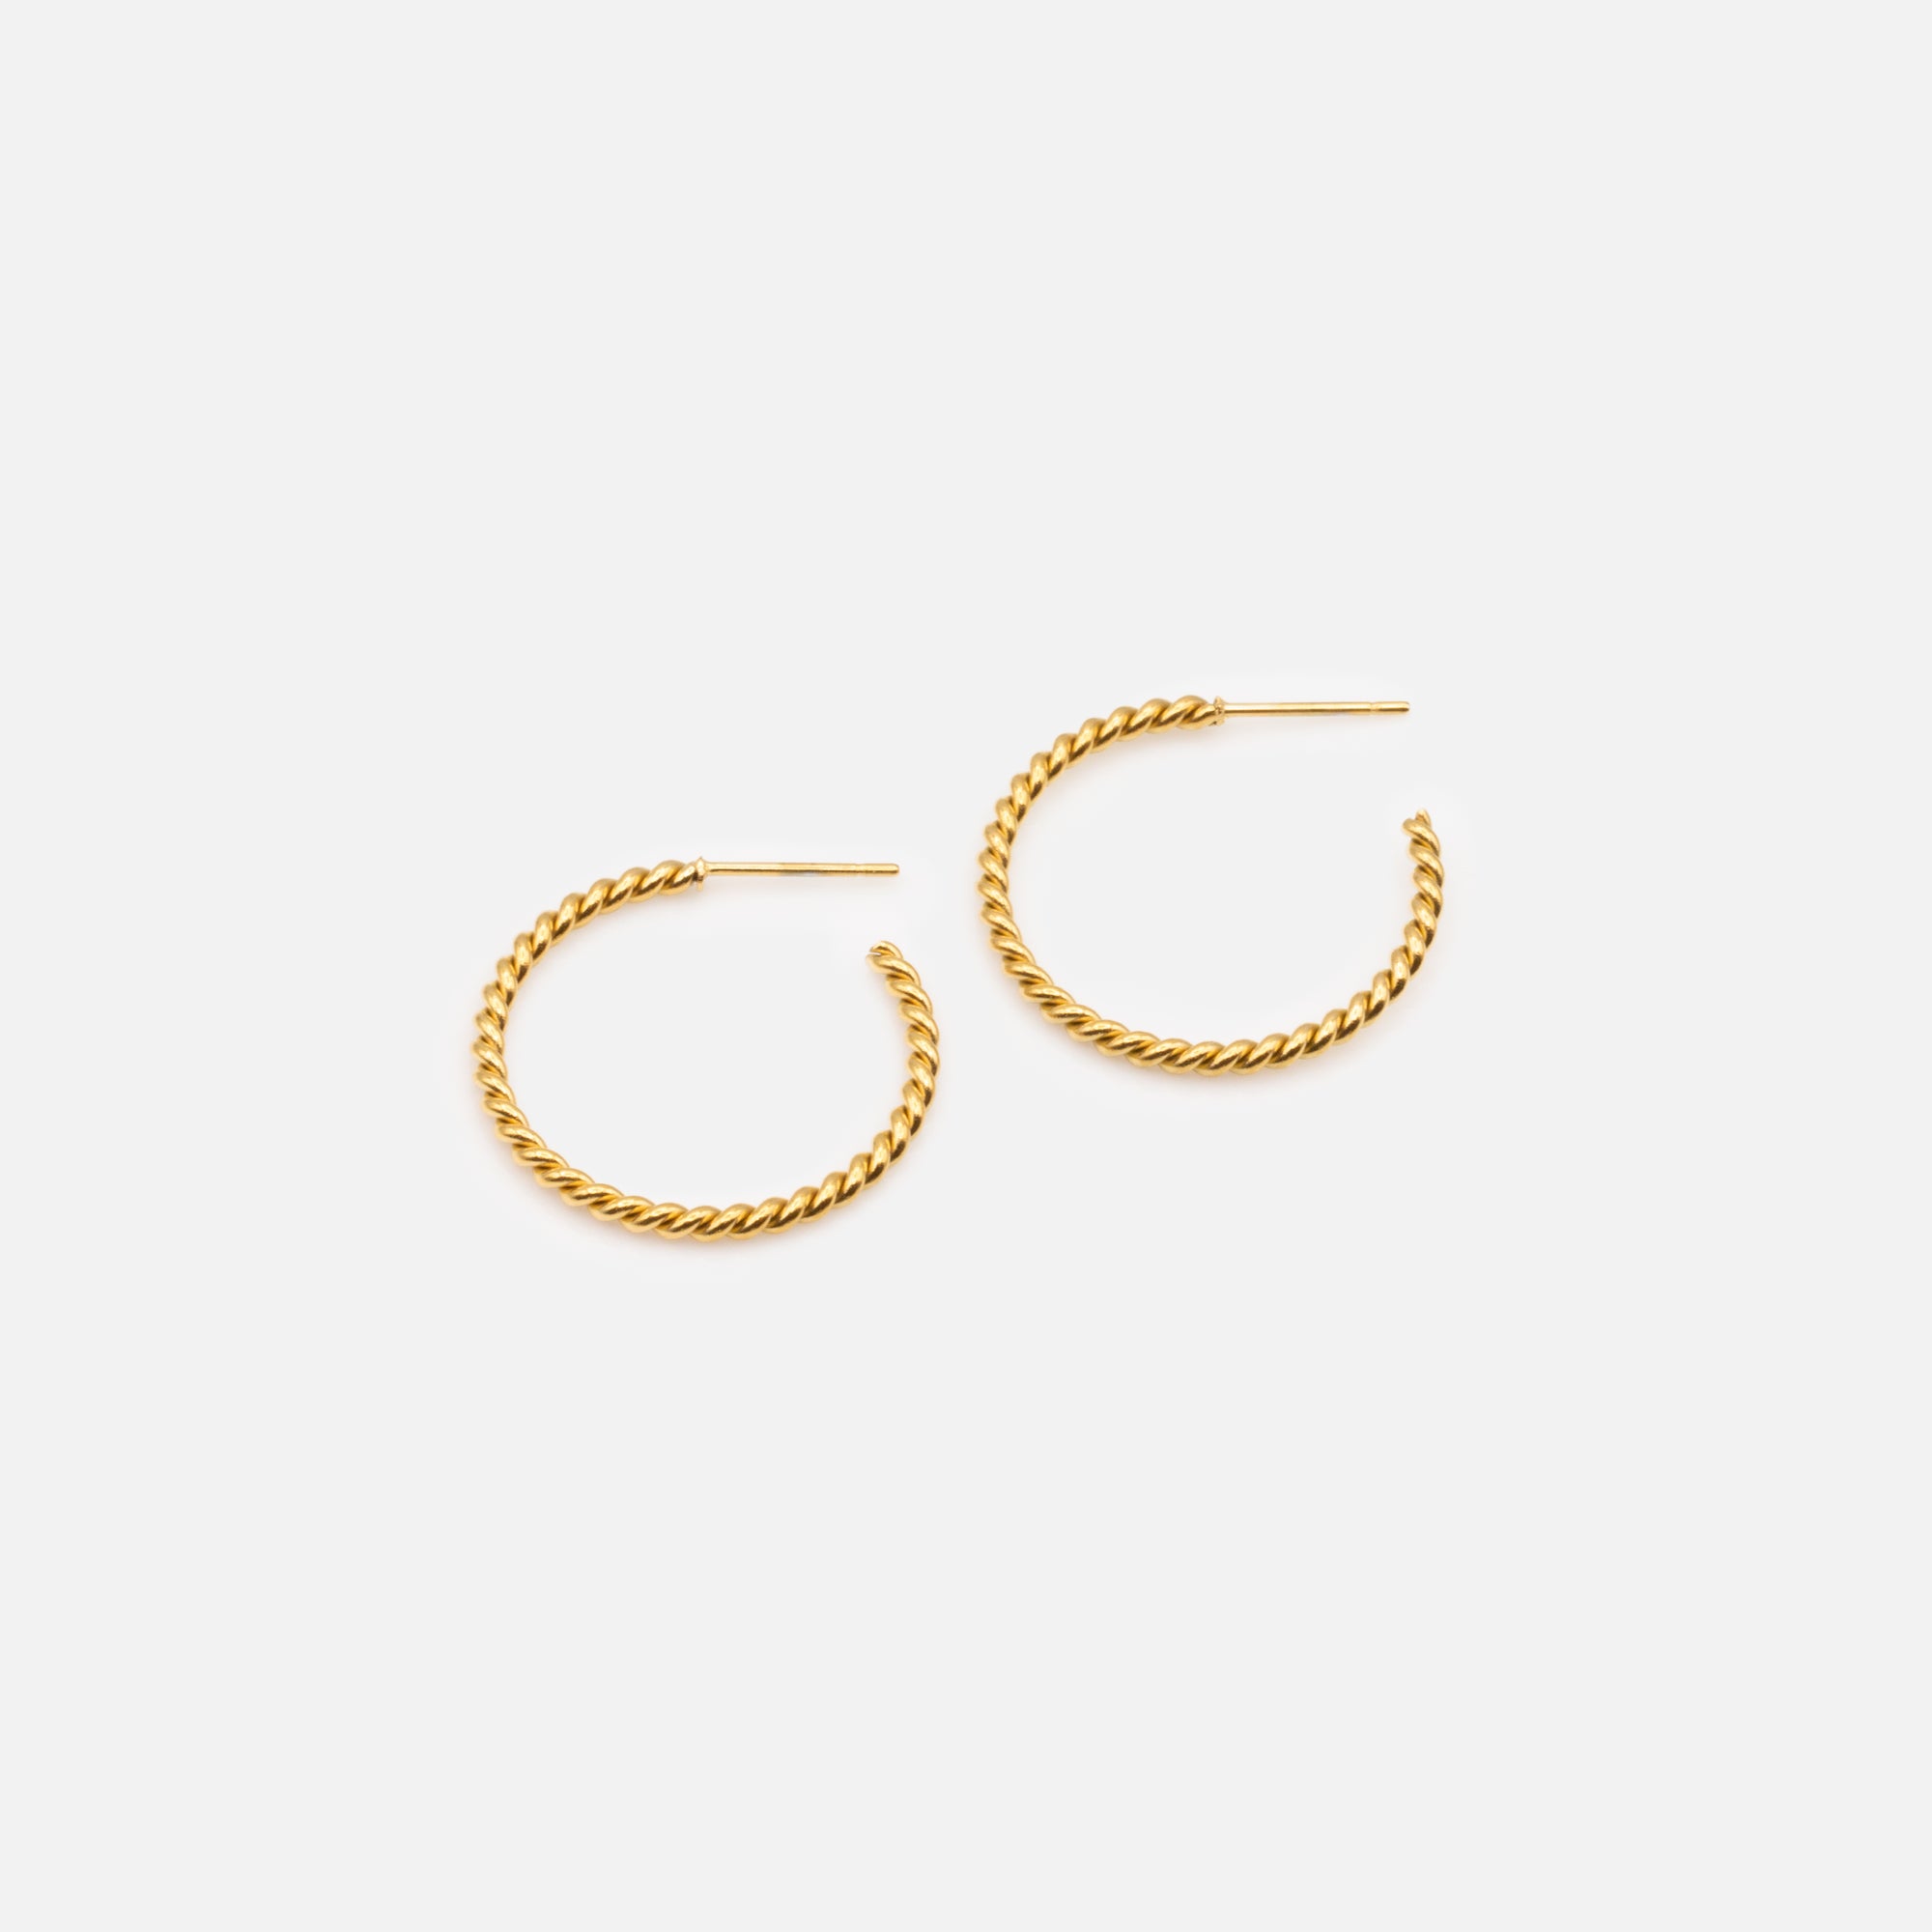 Fine gold hoop earrings 25 mm twisted in stainless steel